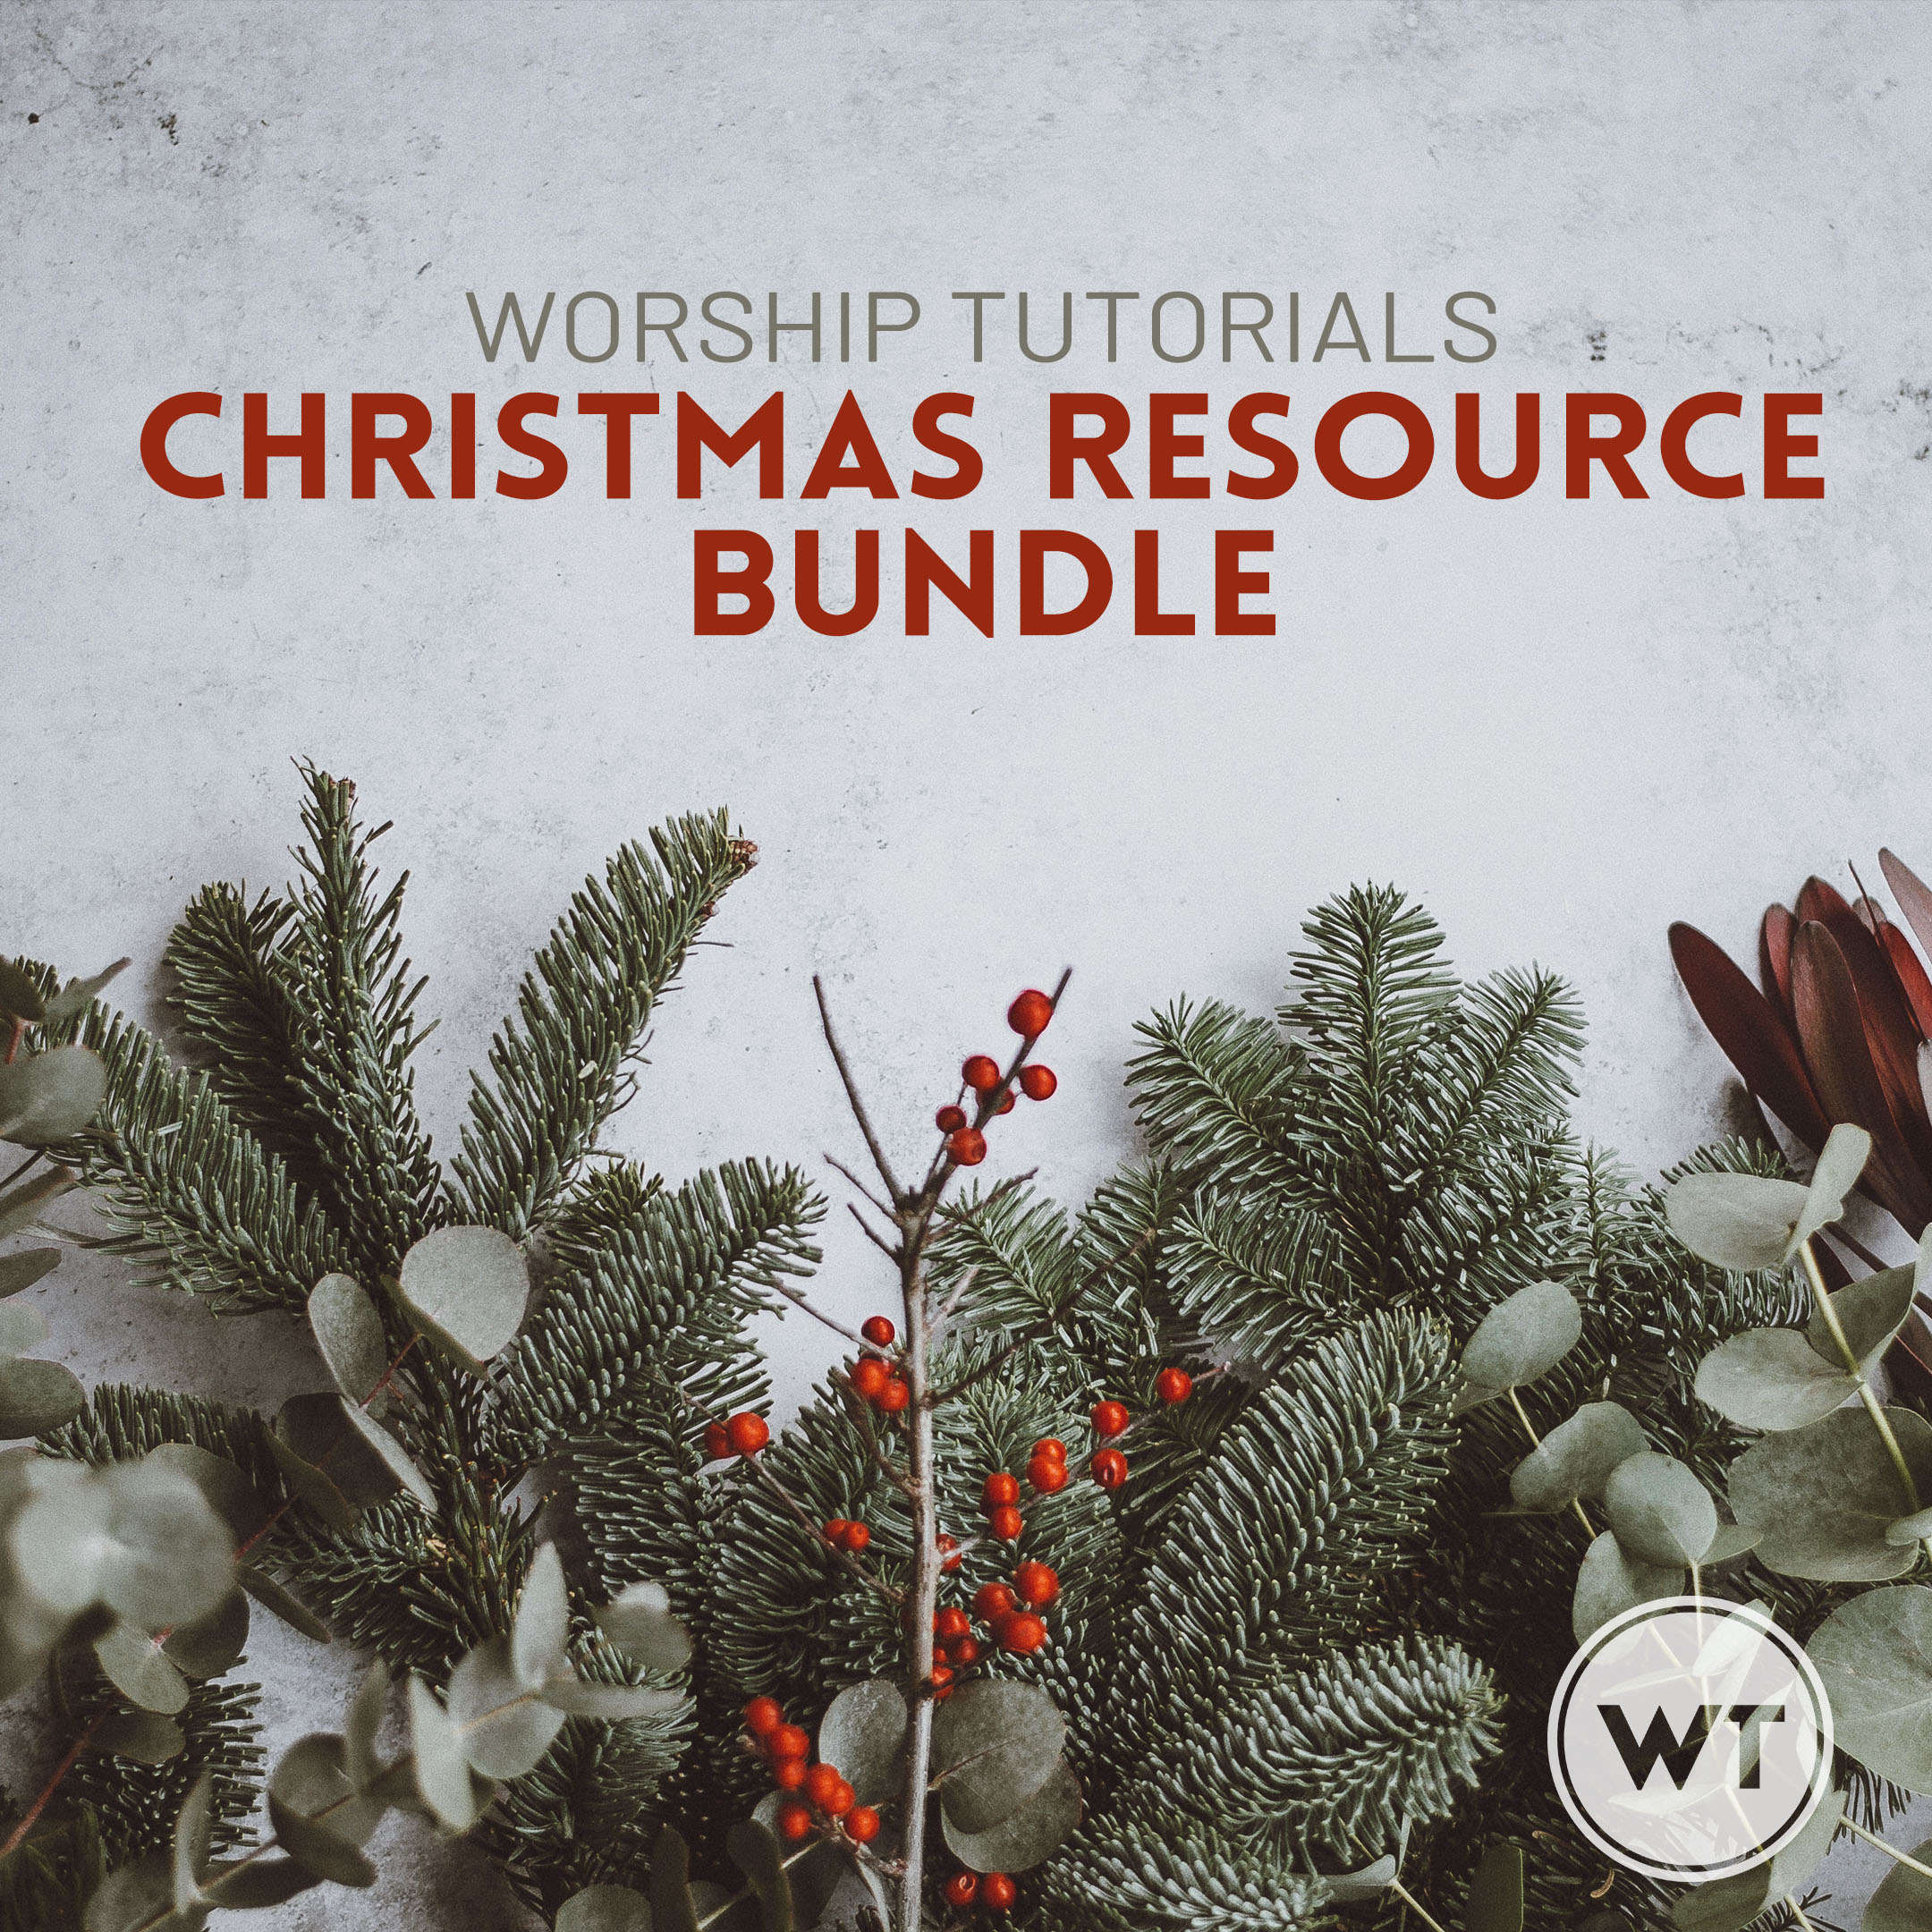 Christmas Resource Bundle - Worship Tutorials